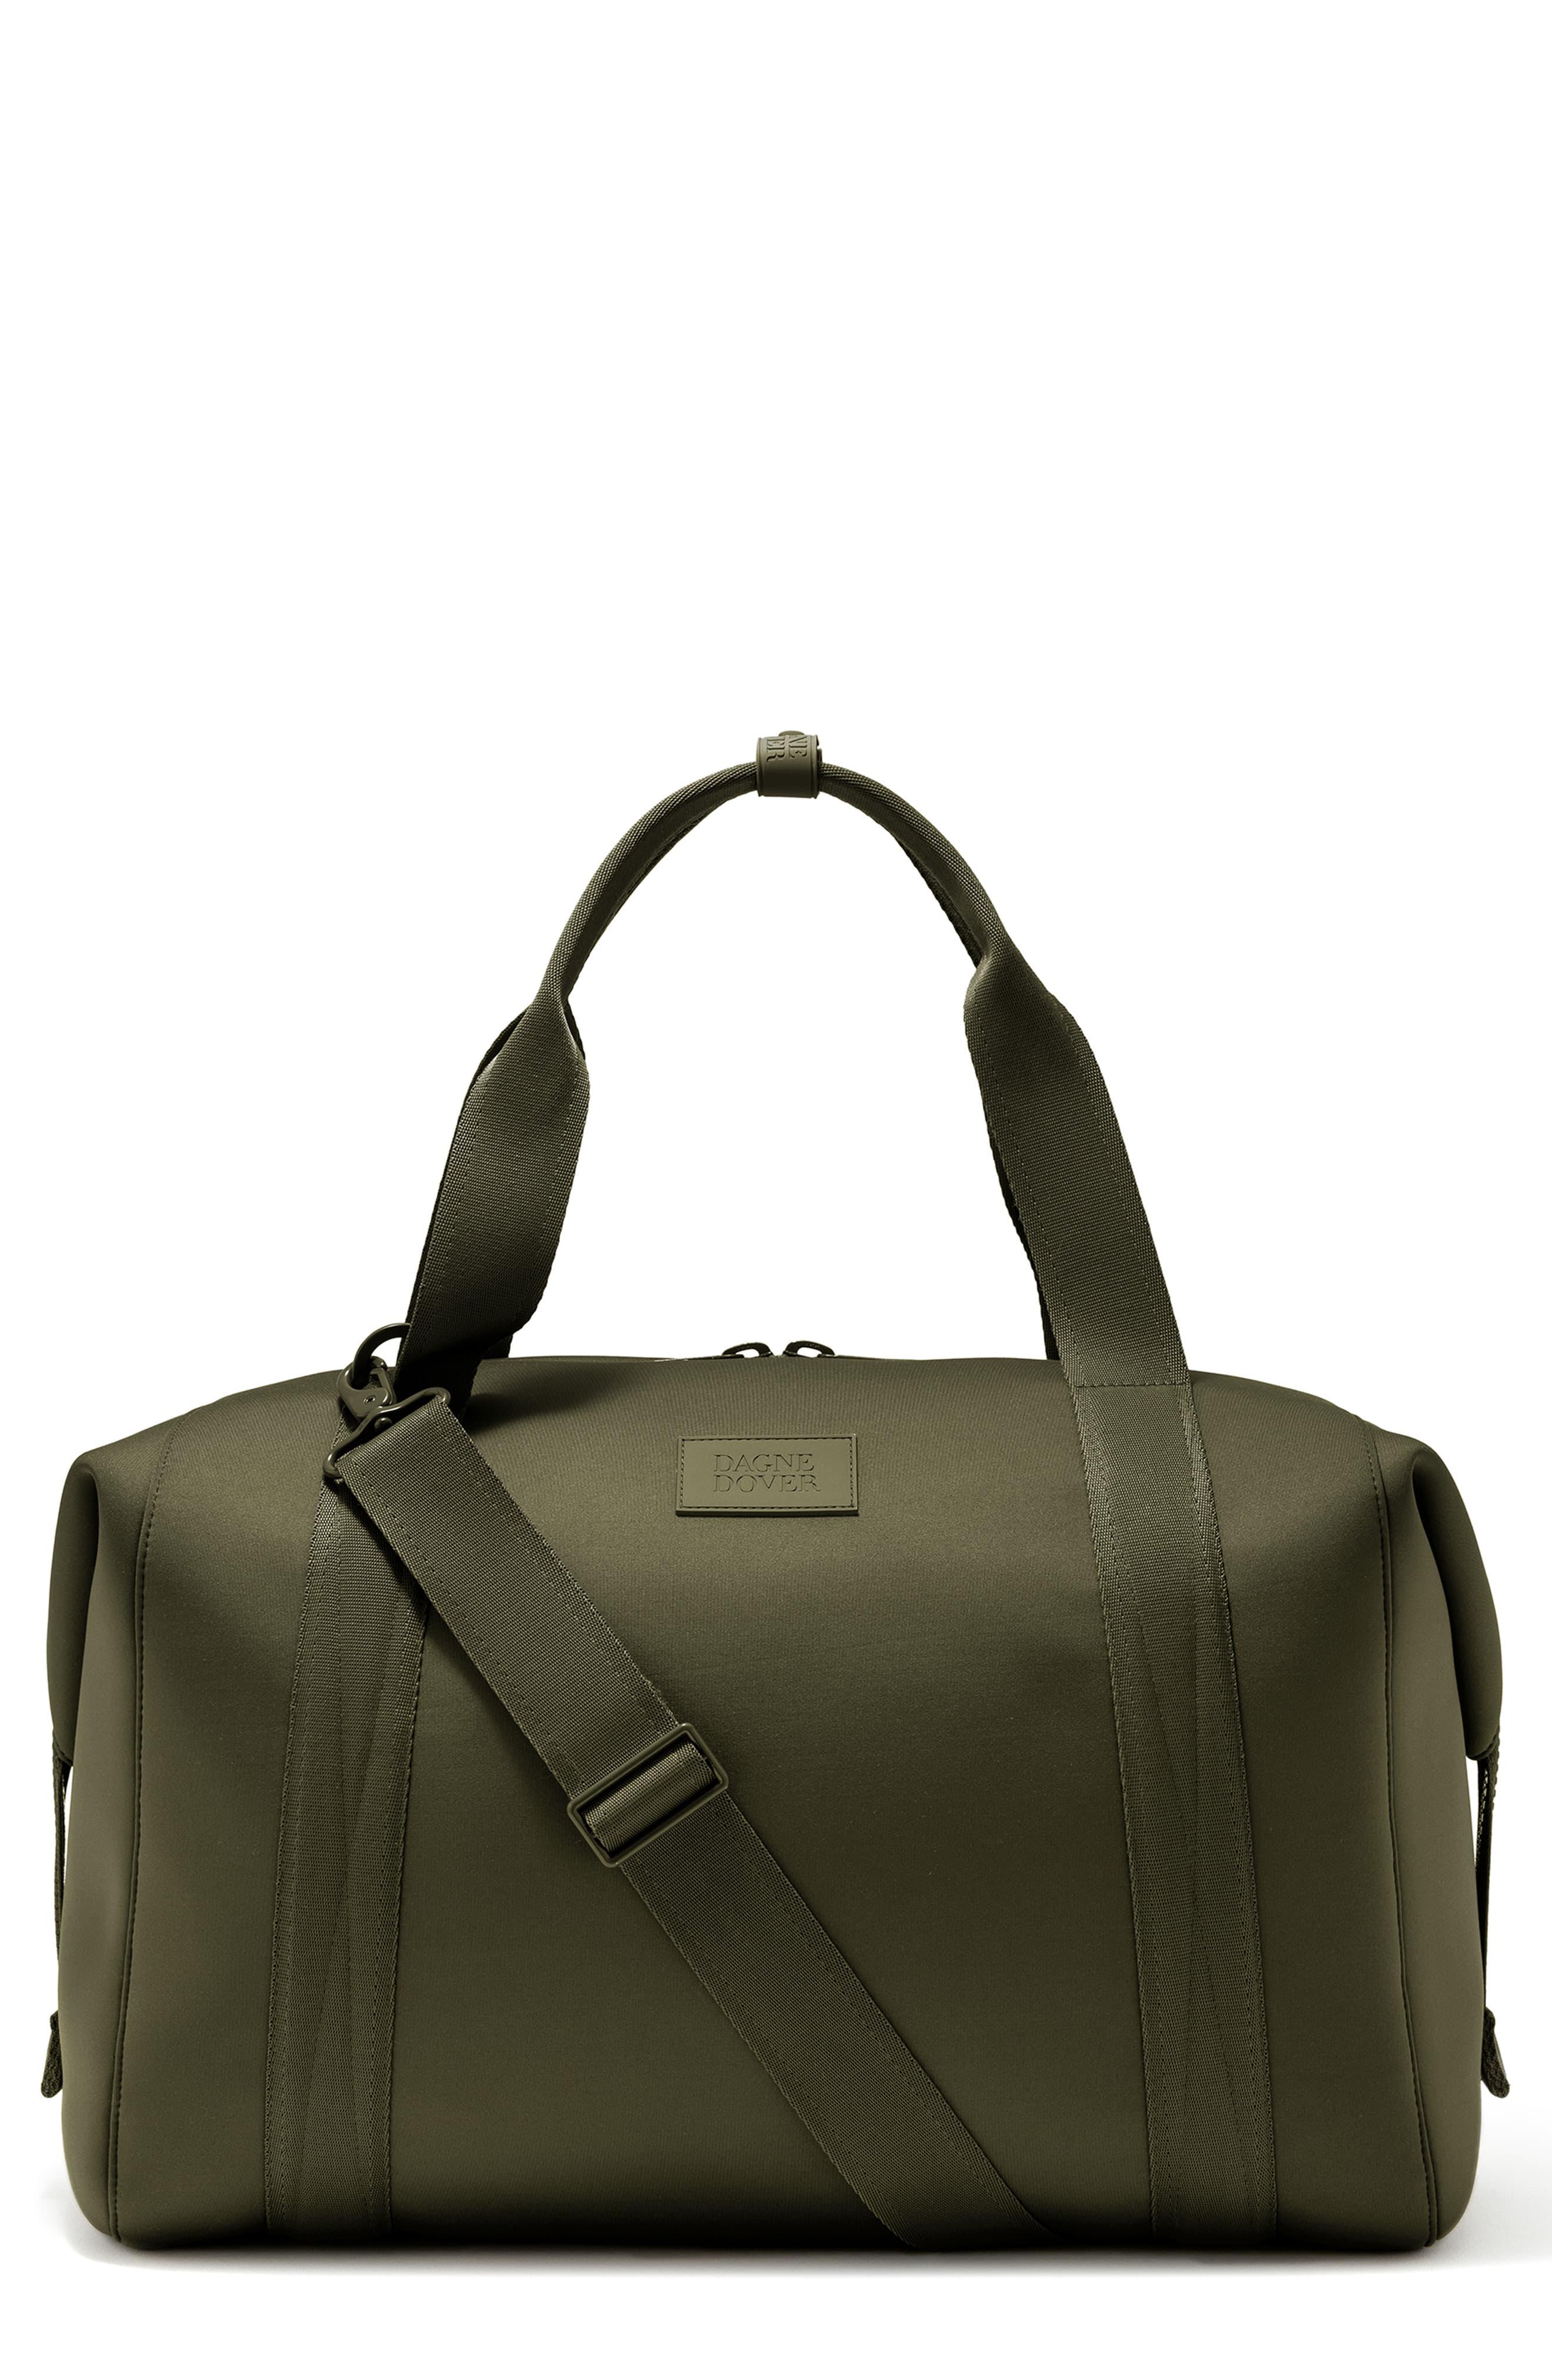 Dagne Dover Xl Landon Carryall Duffle Bag in Dark Moss (Green) - Save ...